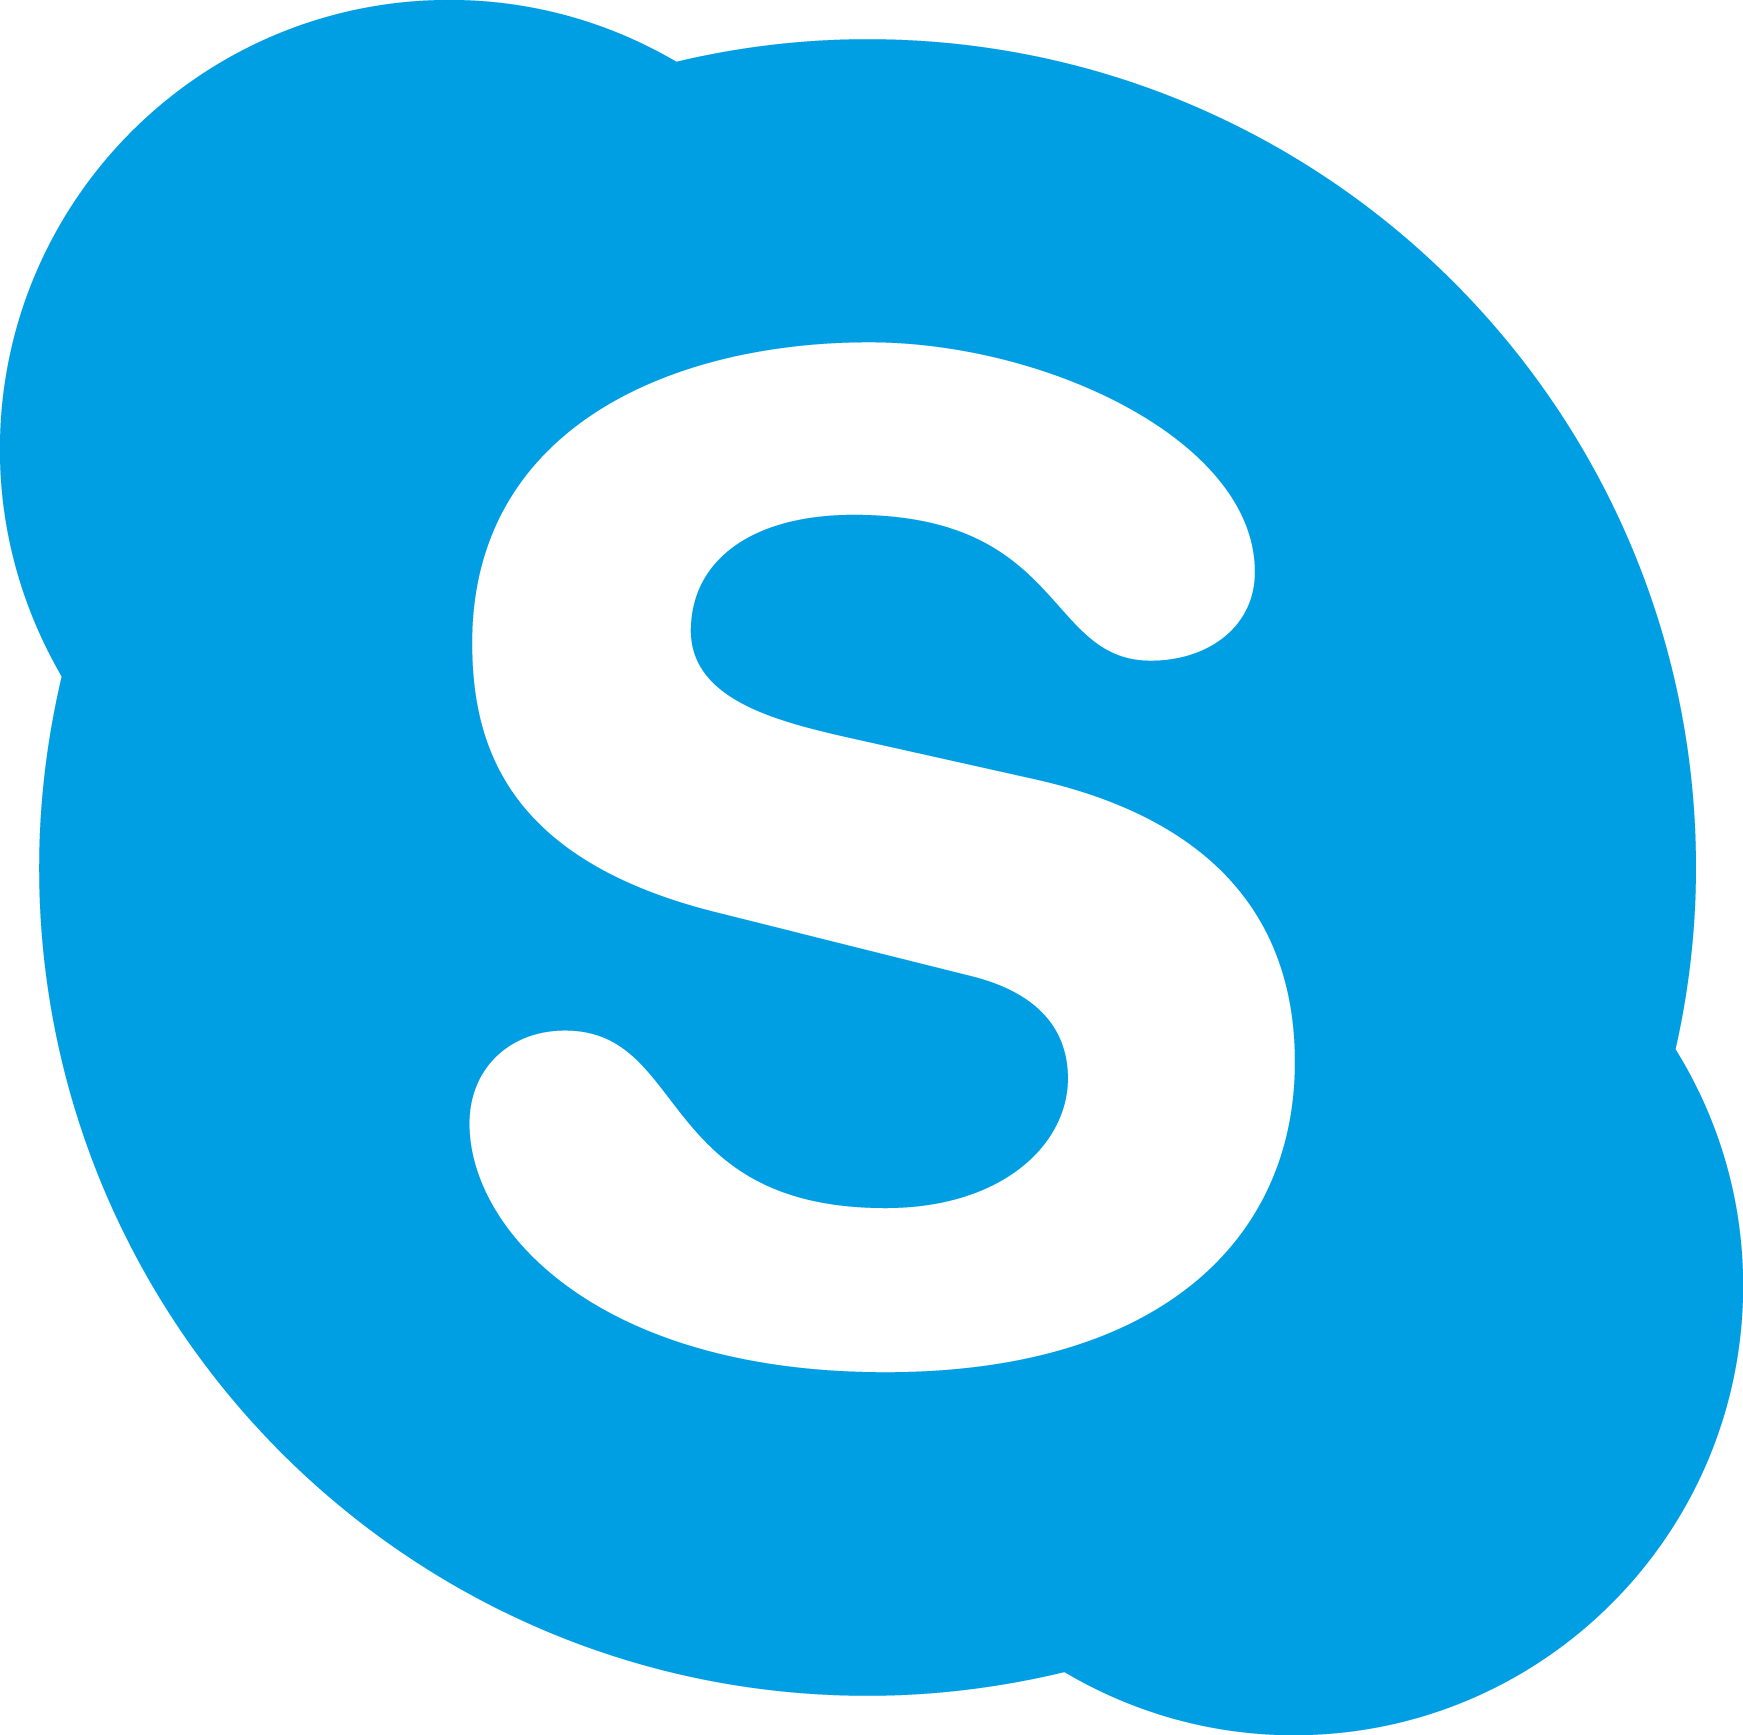 Baseline skype logo